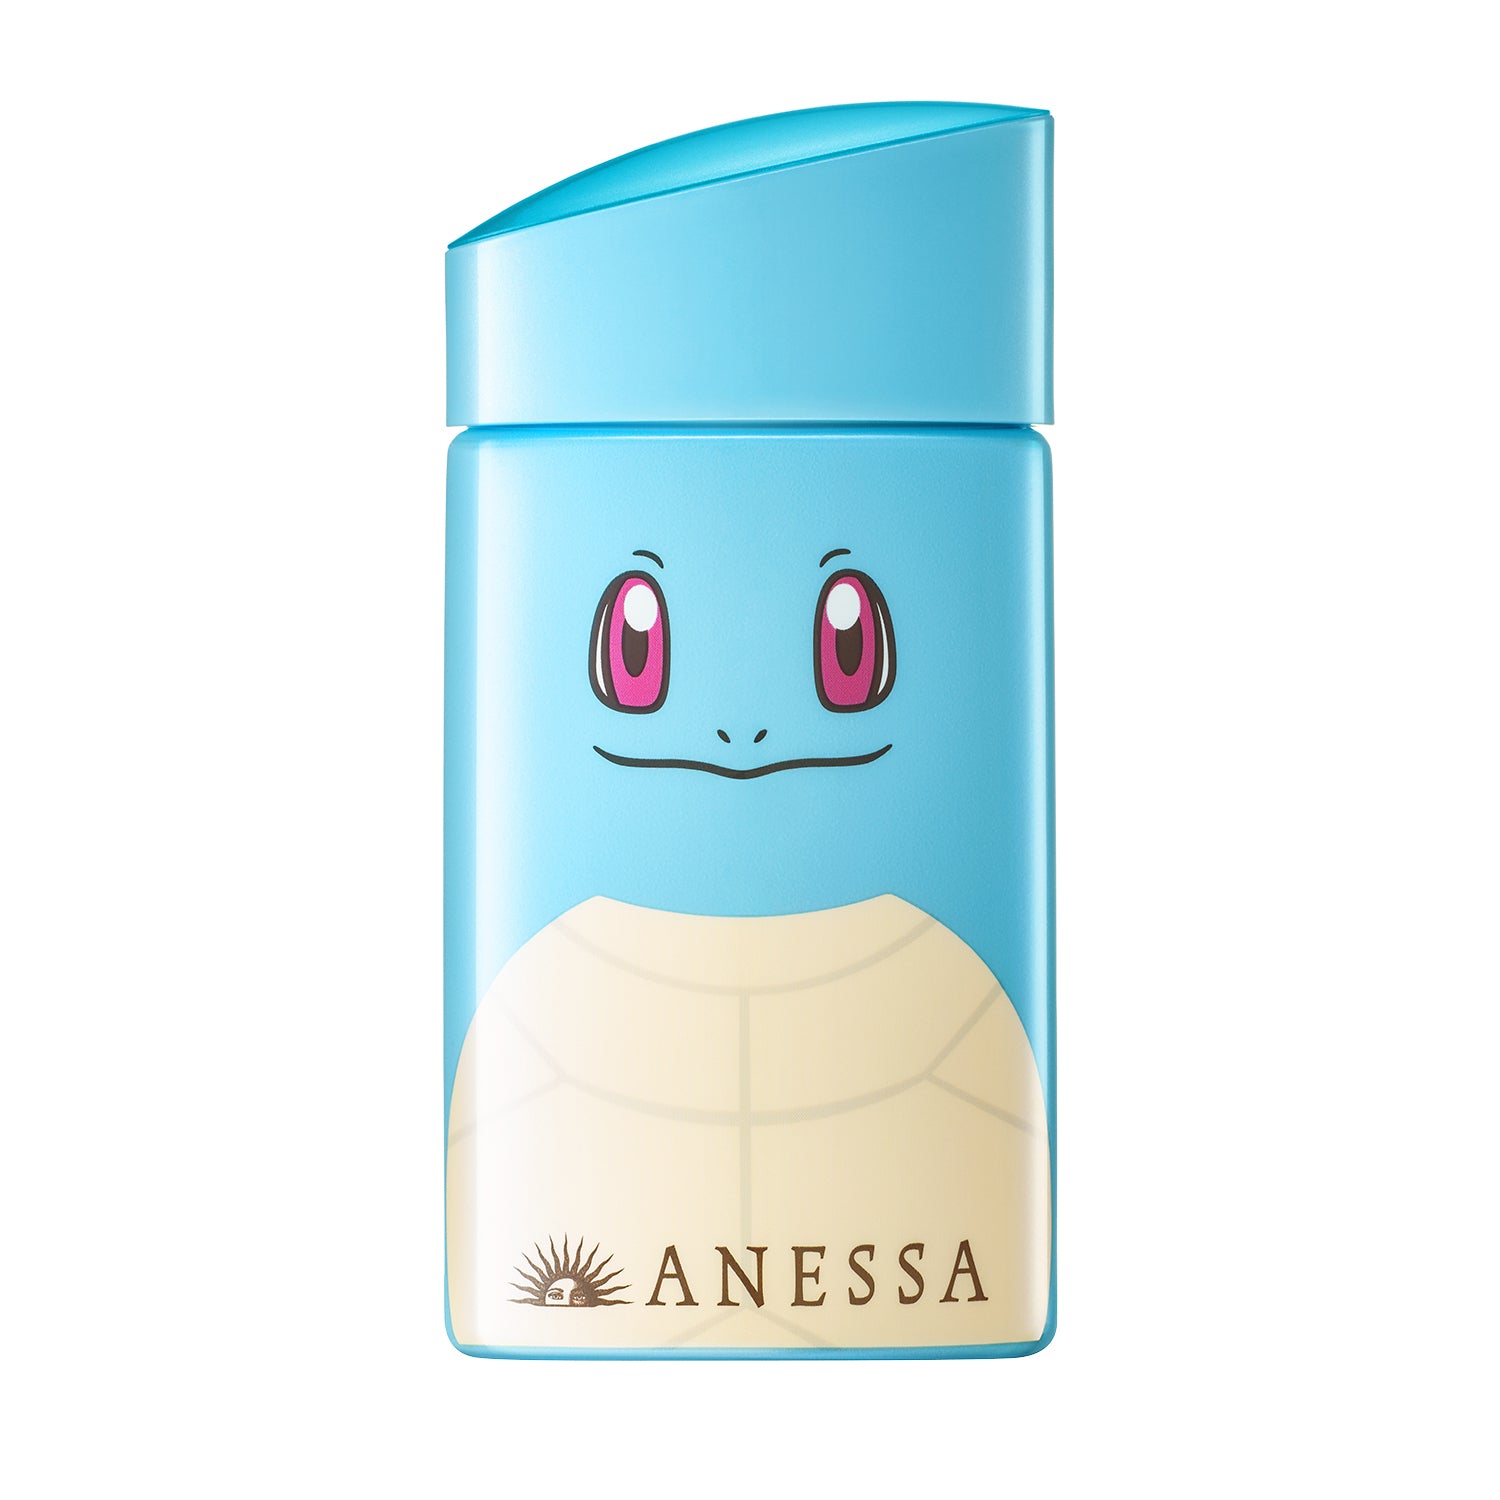 Anessa Perfect UV Sunscreen Milk SPF50+ PA+ - Pokemon Squirtle Beauty Shiseido   